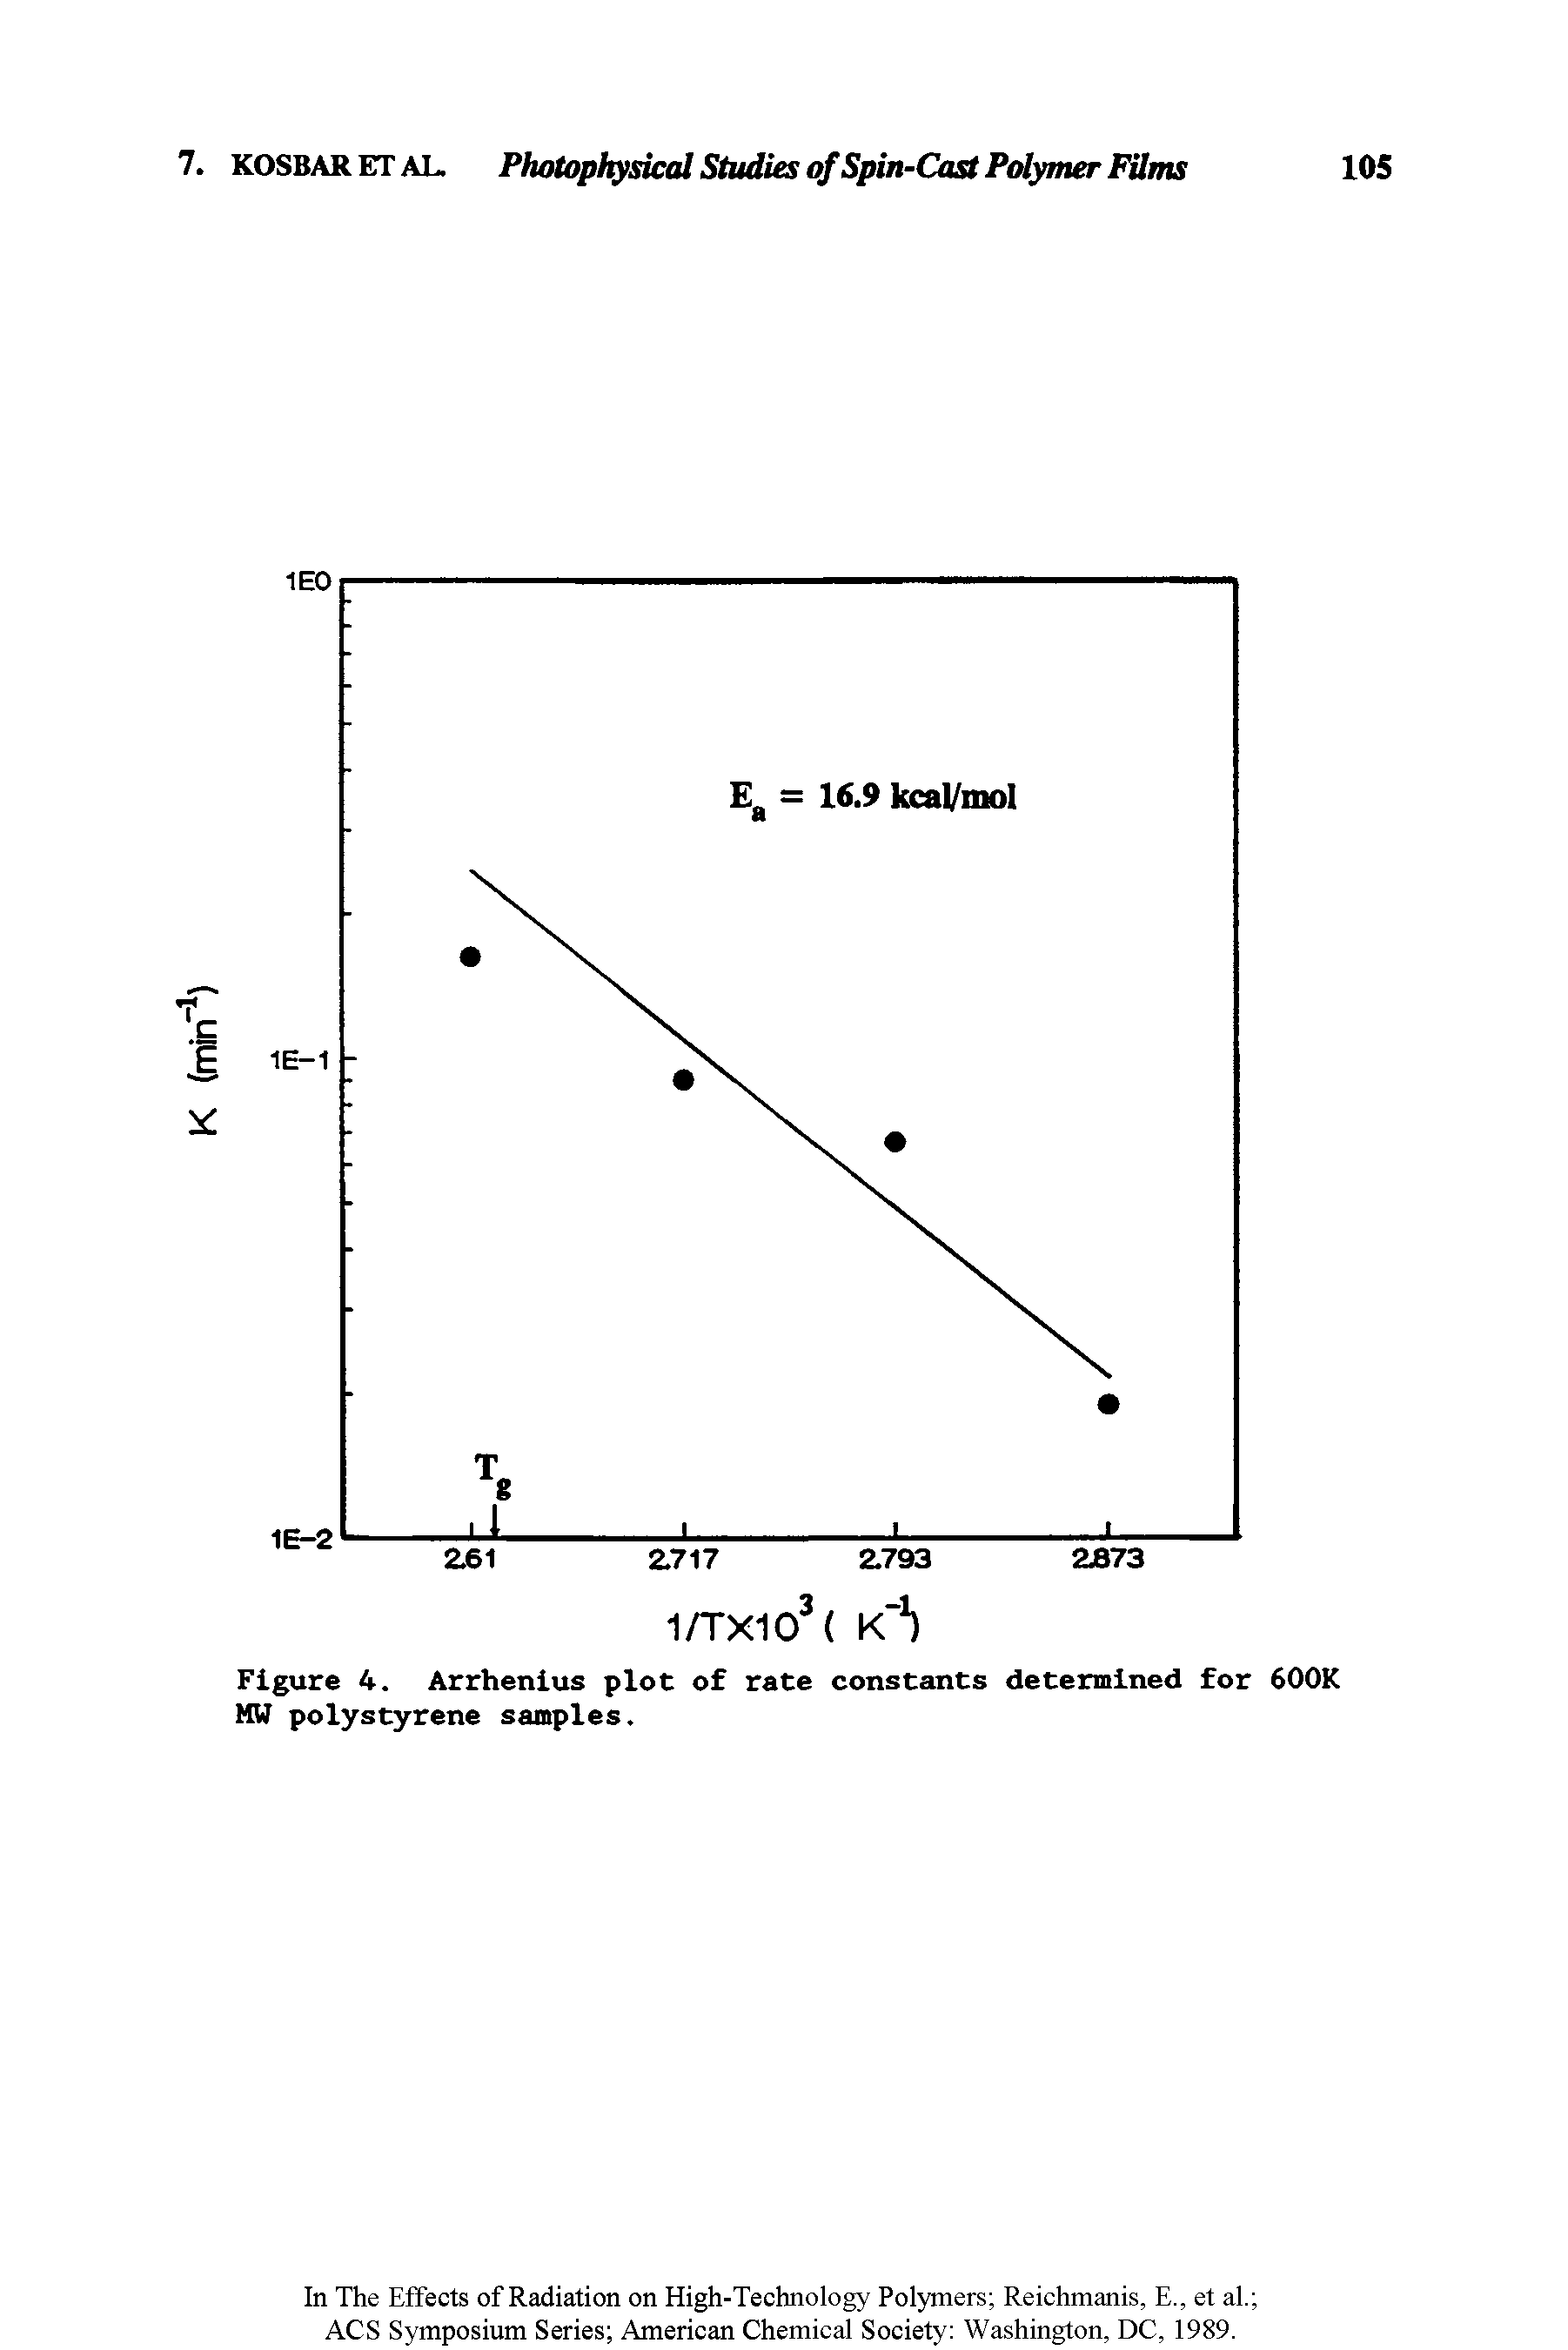 Figure 4. Arrhenius plot of rate constants determined for 600K MW polystyrene samples.